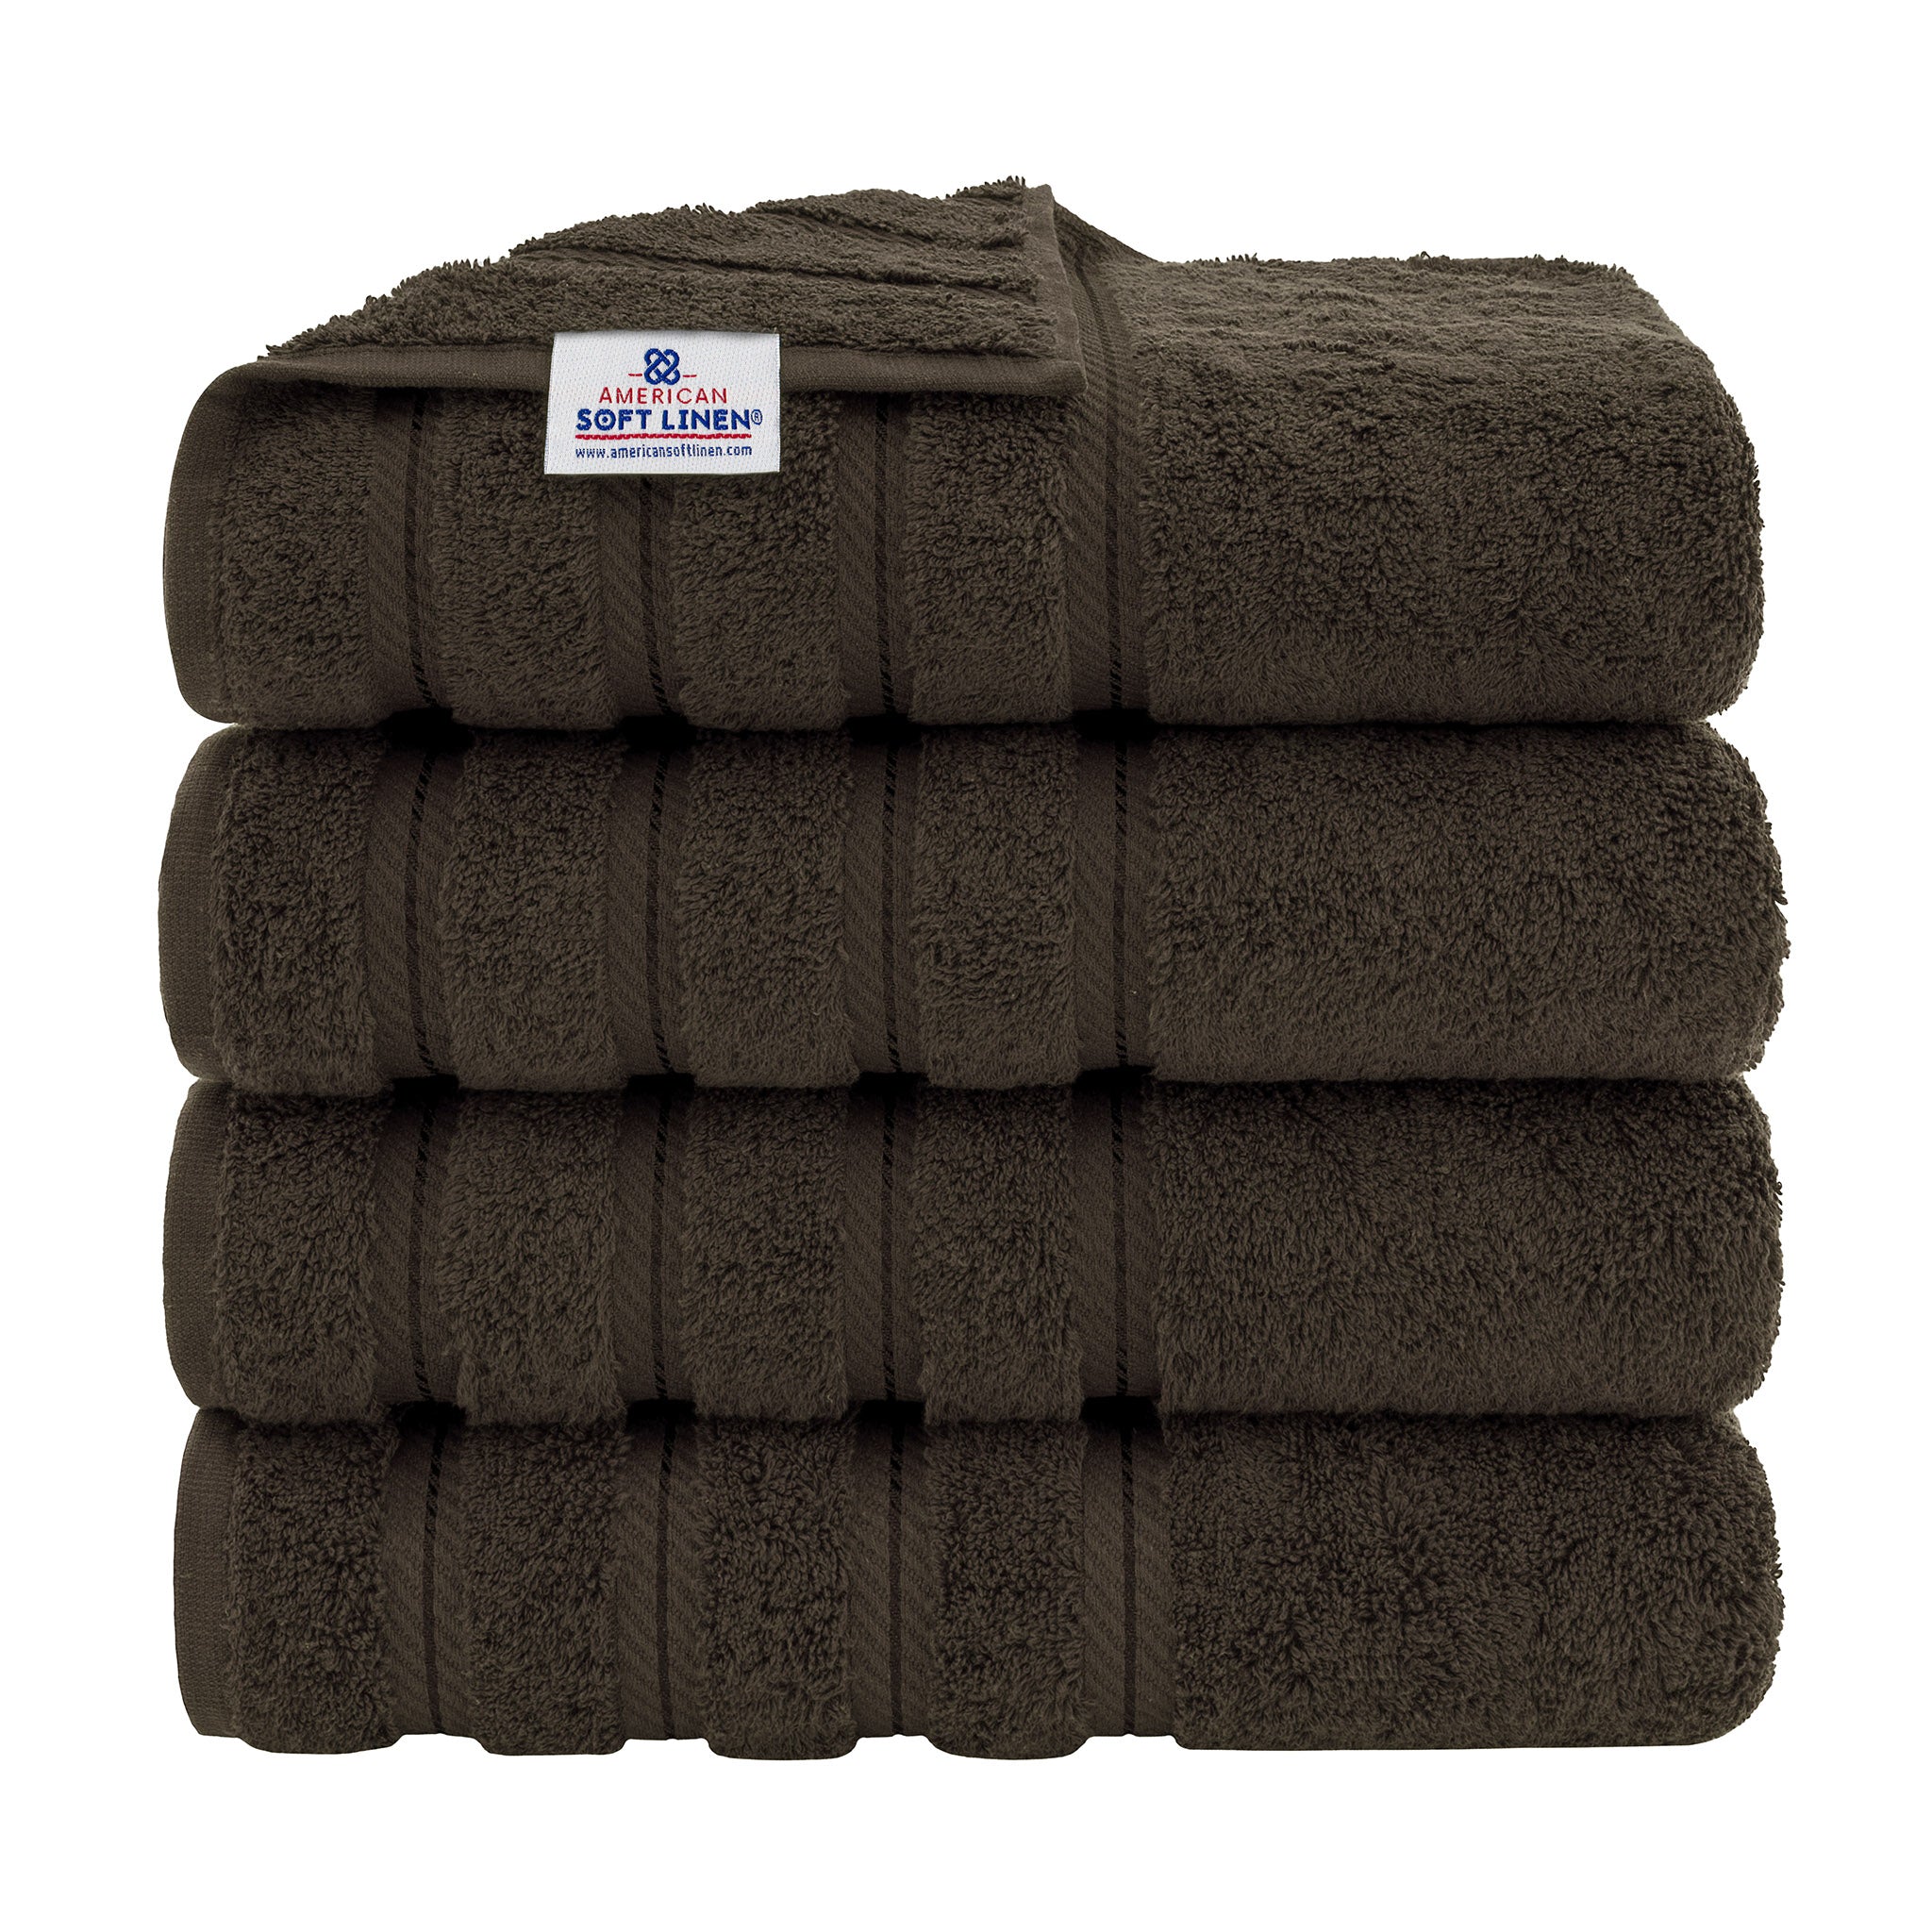 American Soft Linen 100% Turkish Cotton 4 Pack Bath Towel Set Wholesale chocolate-brown-1